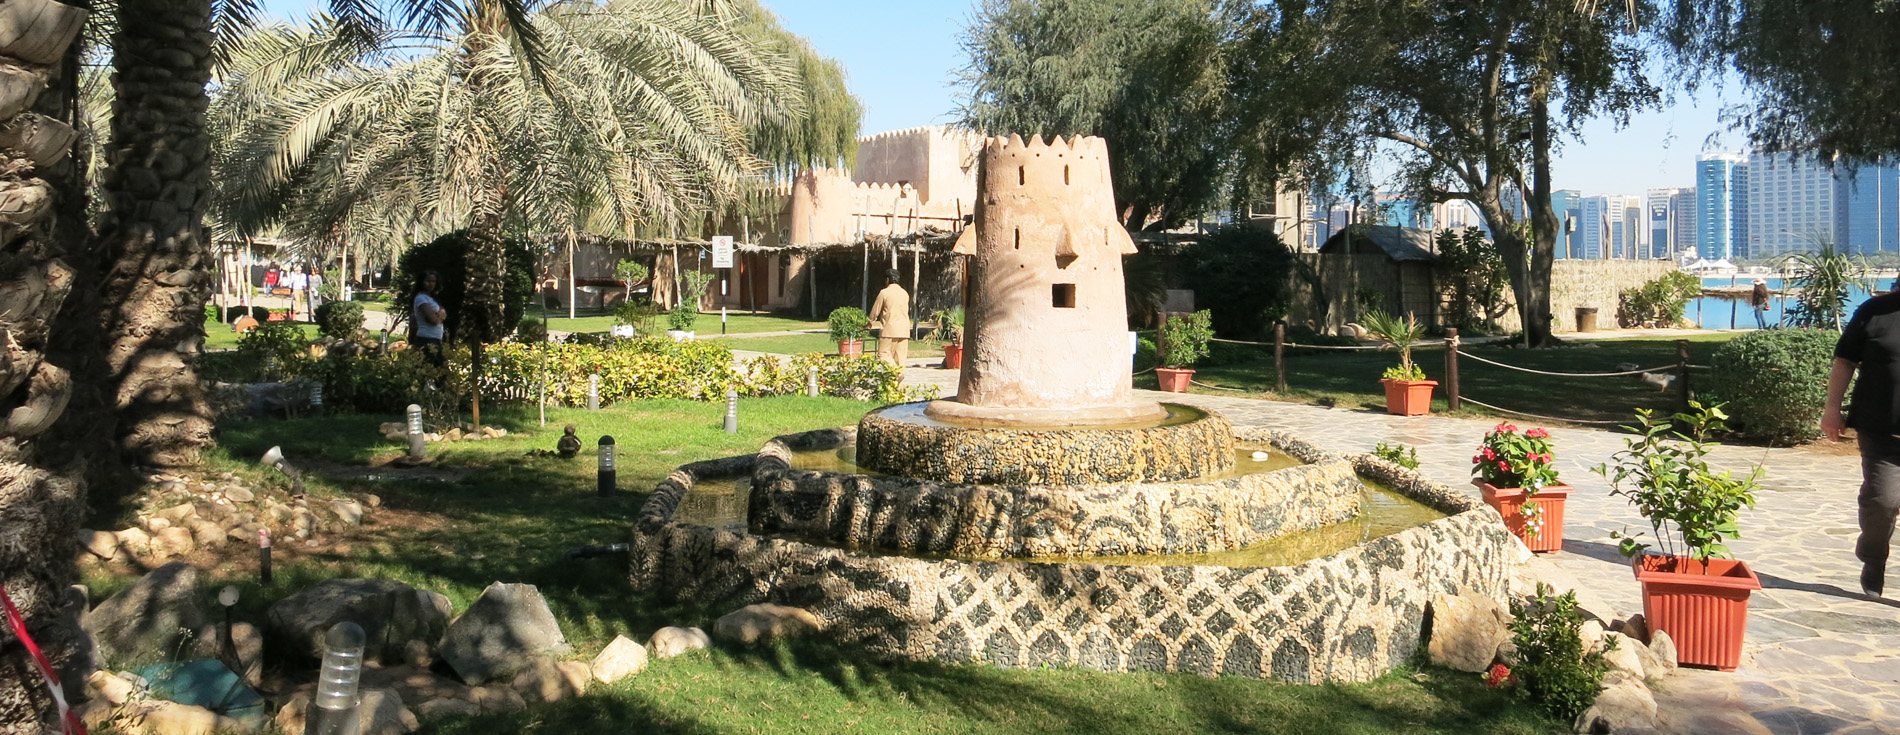 The Heritage village in Abu Dhabi